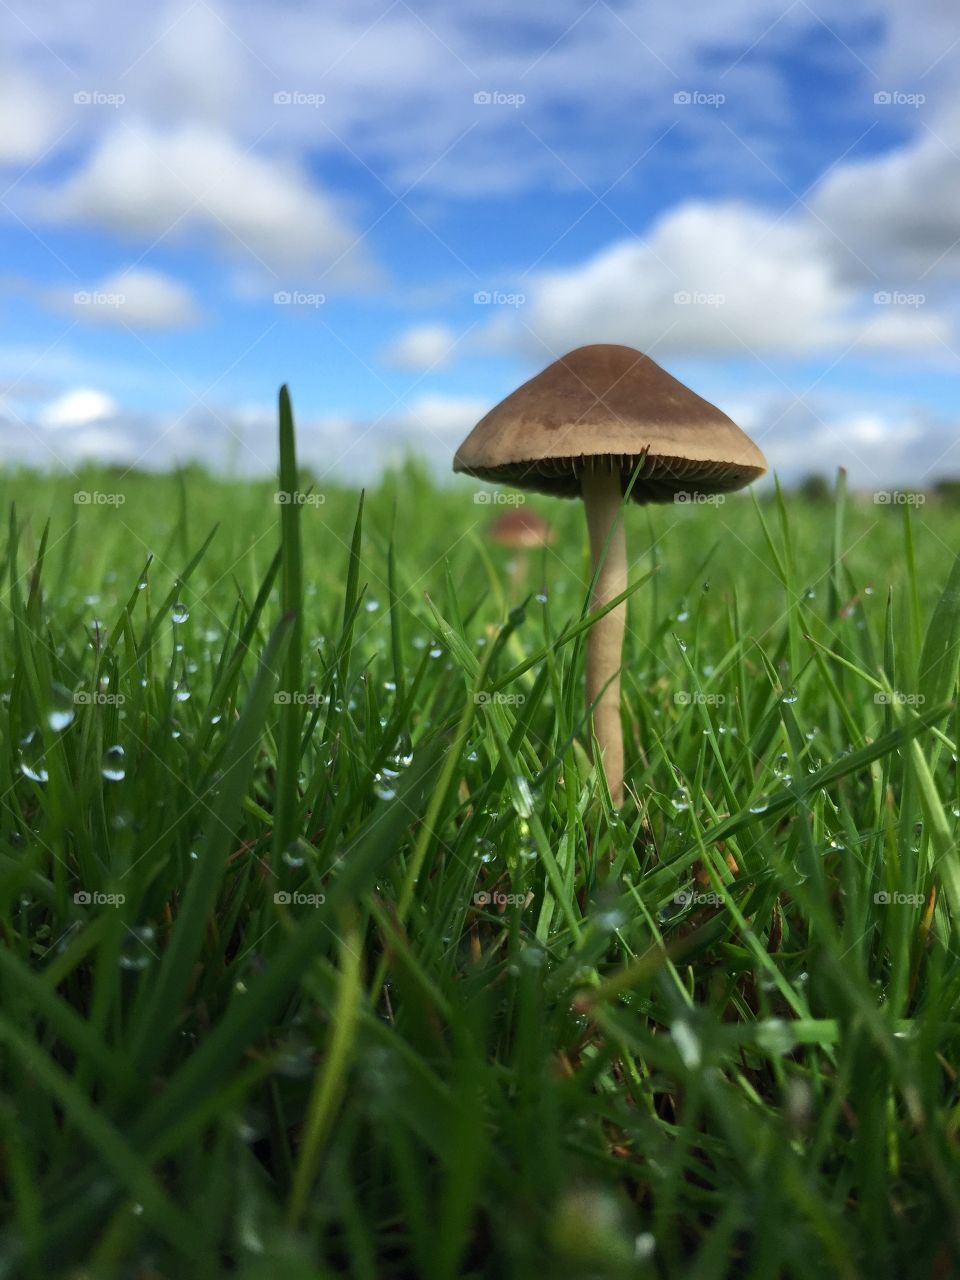 Mushrooms growing in a field